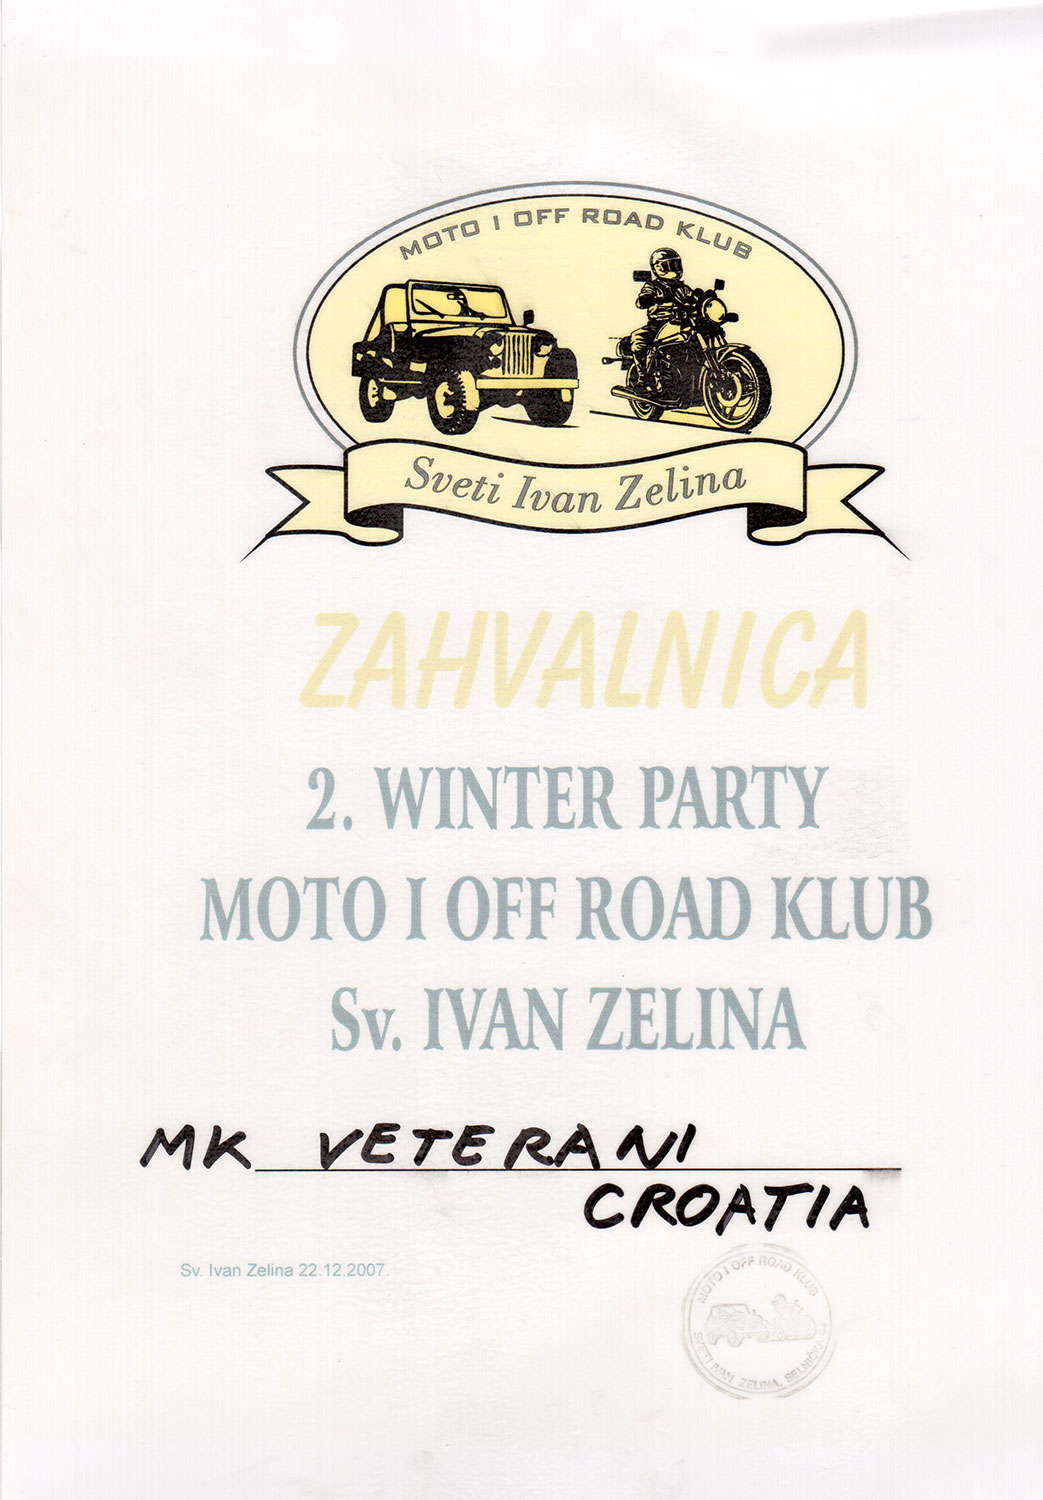 2007 12 22 mk moto i offroad zelina